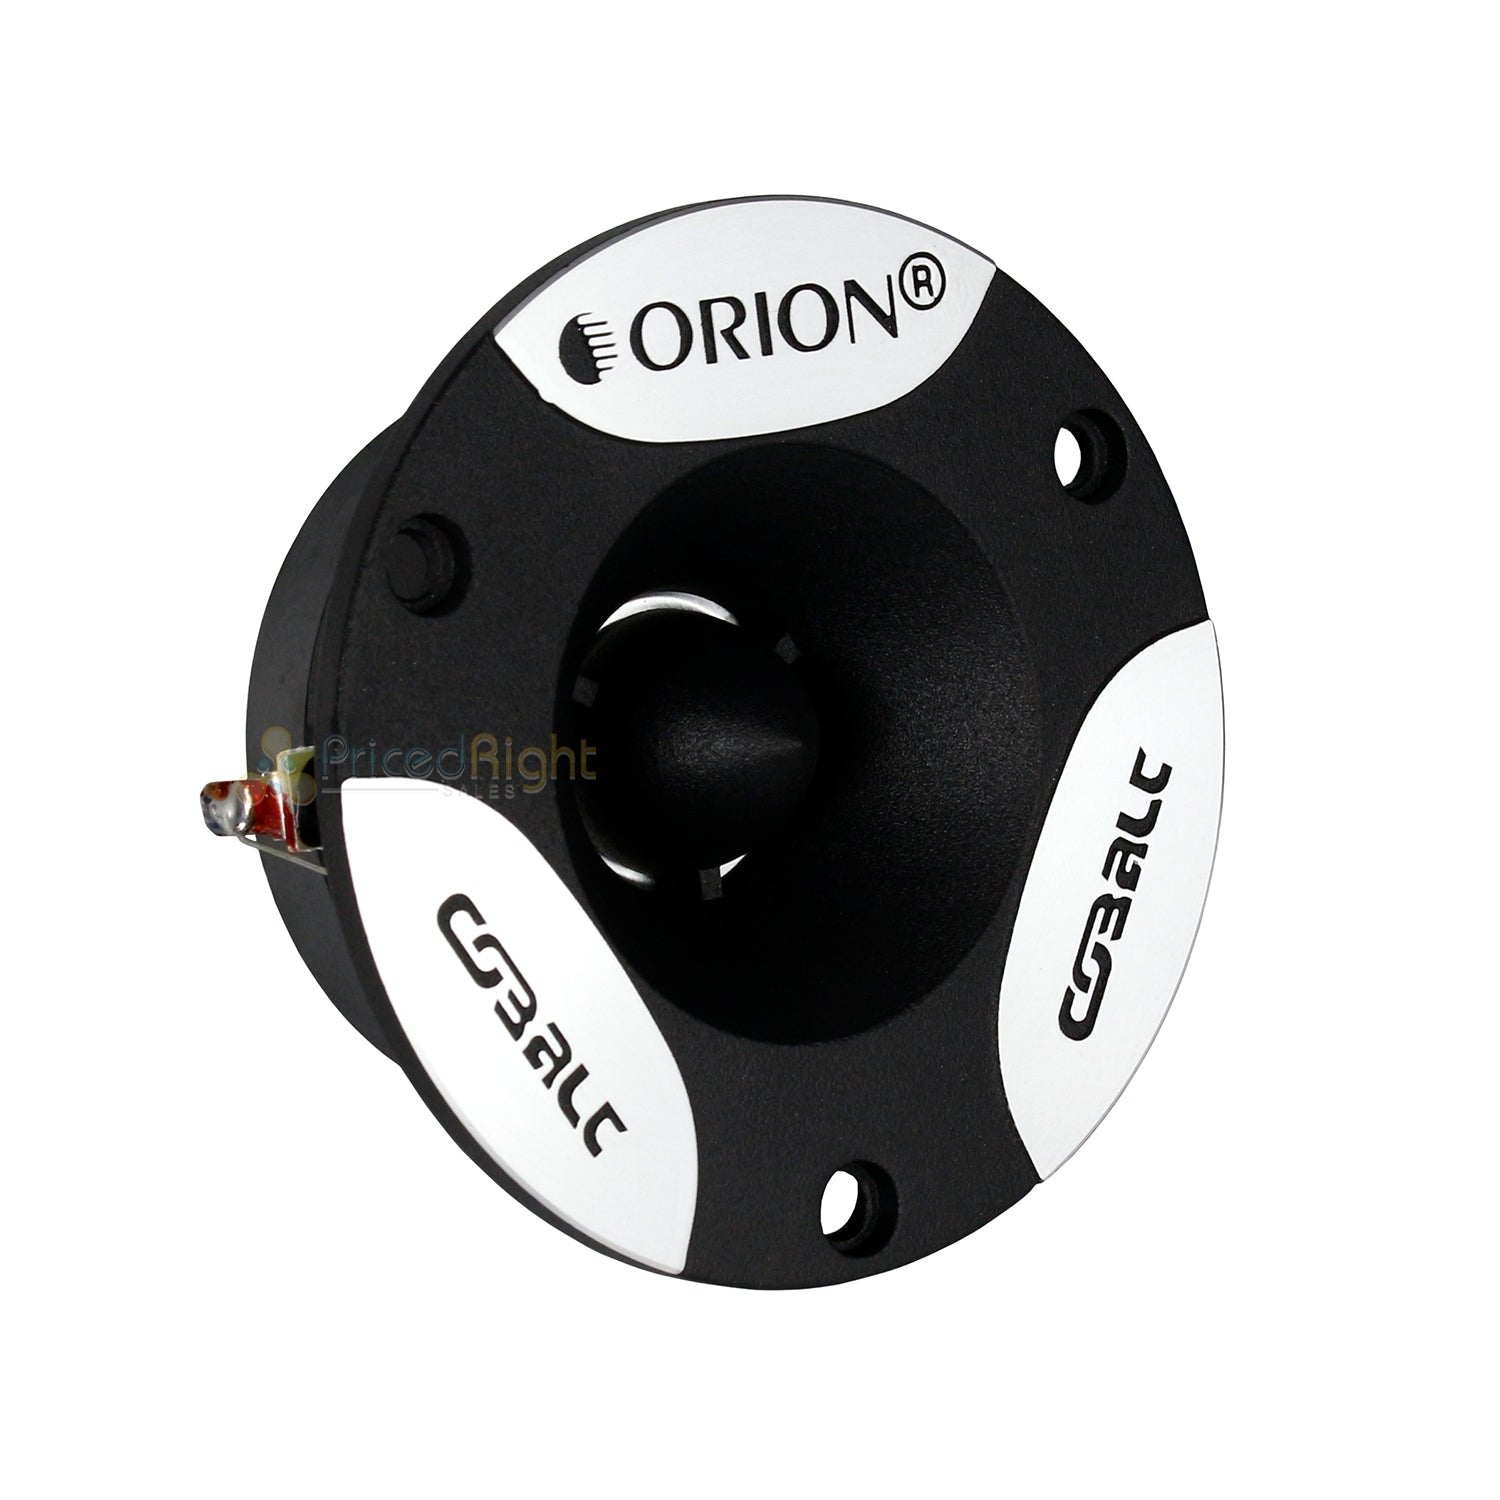 4 Orion Cobalt 3.75" Super Tweeters 350W Max Power Car Audio Two Pair CTW101